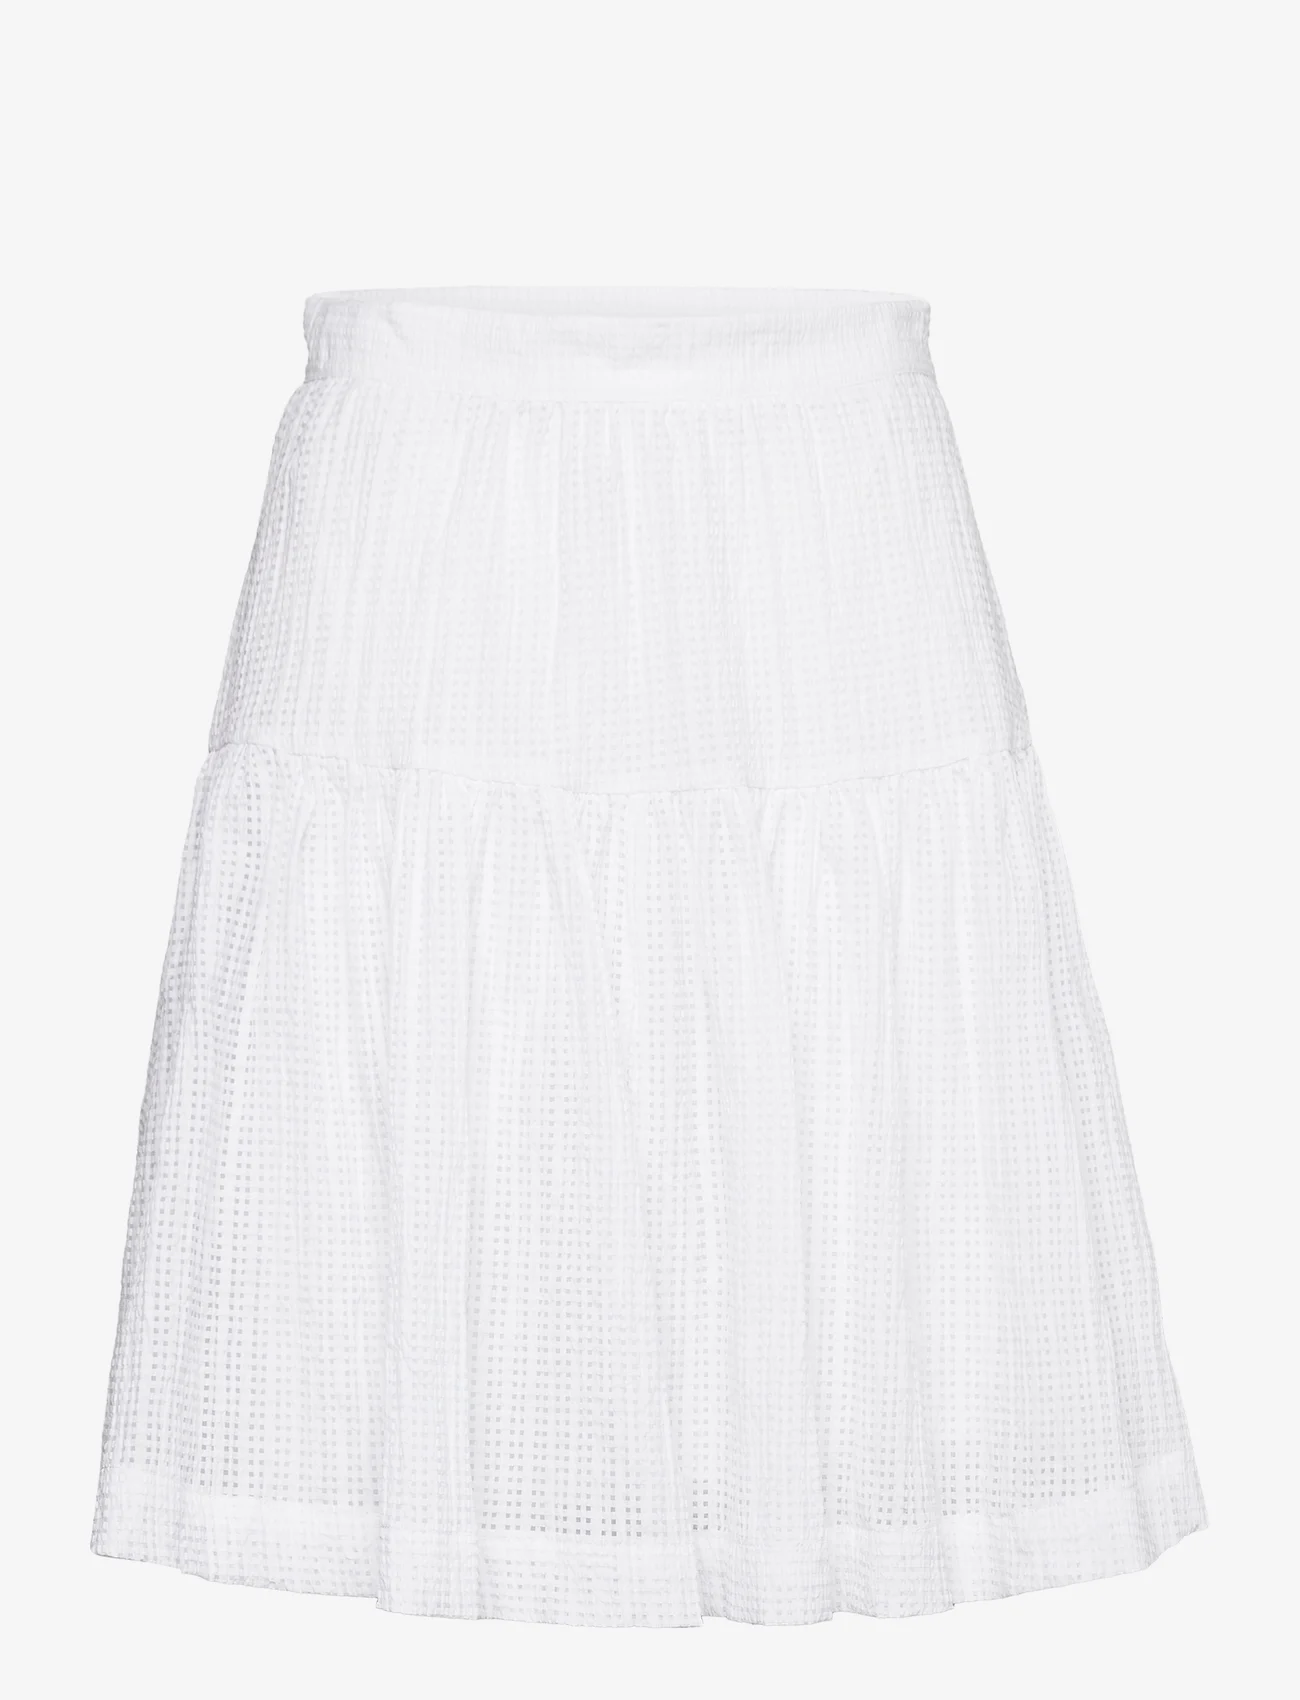 Stella Nova - Phine My - pleated skirts - white - 0